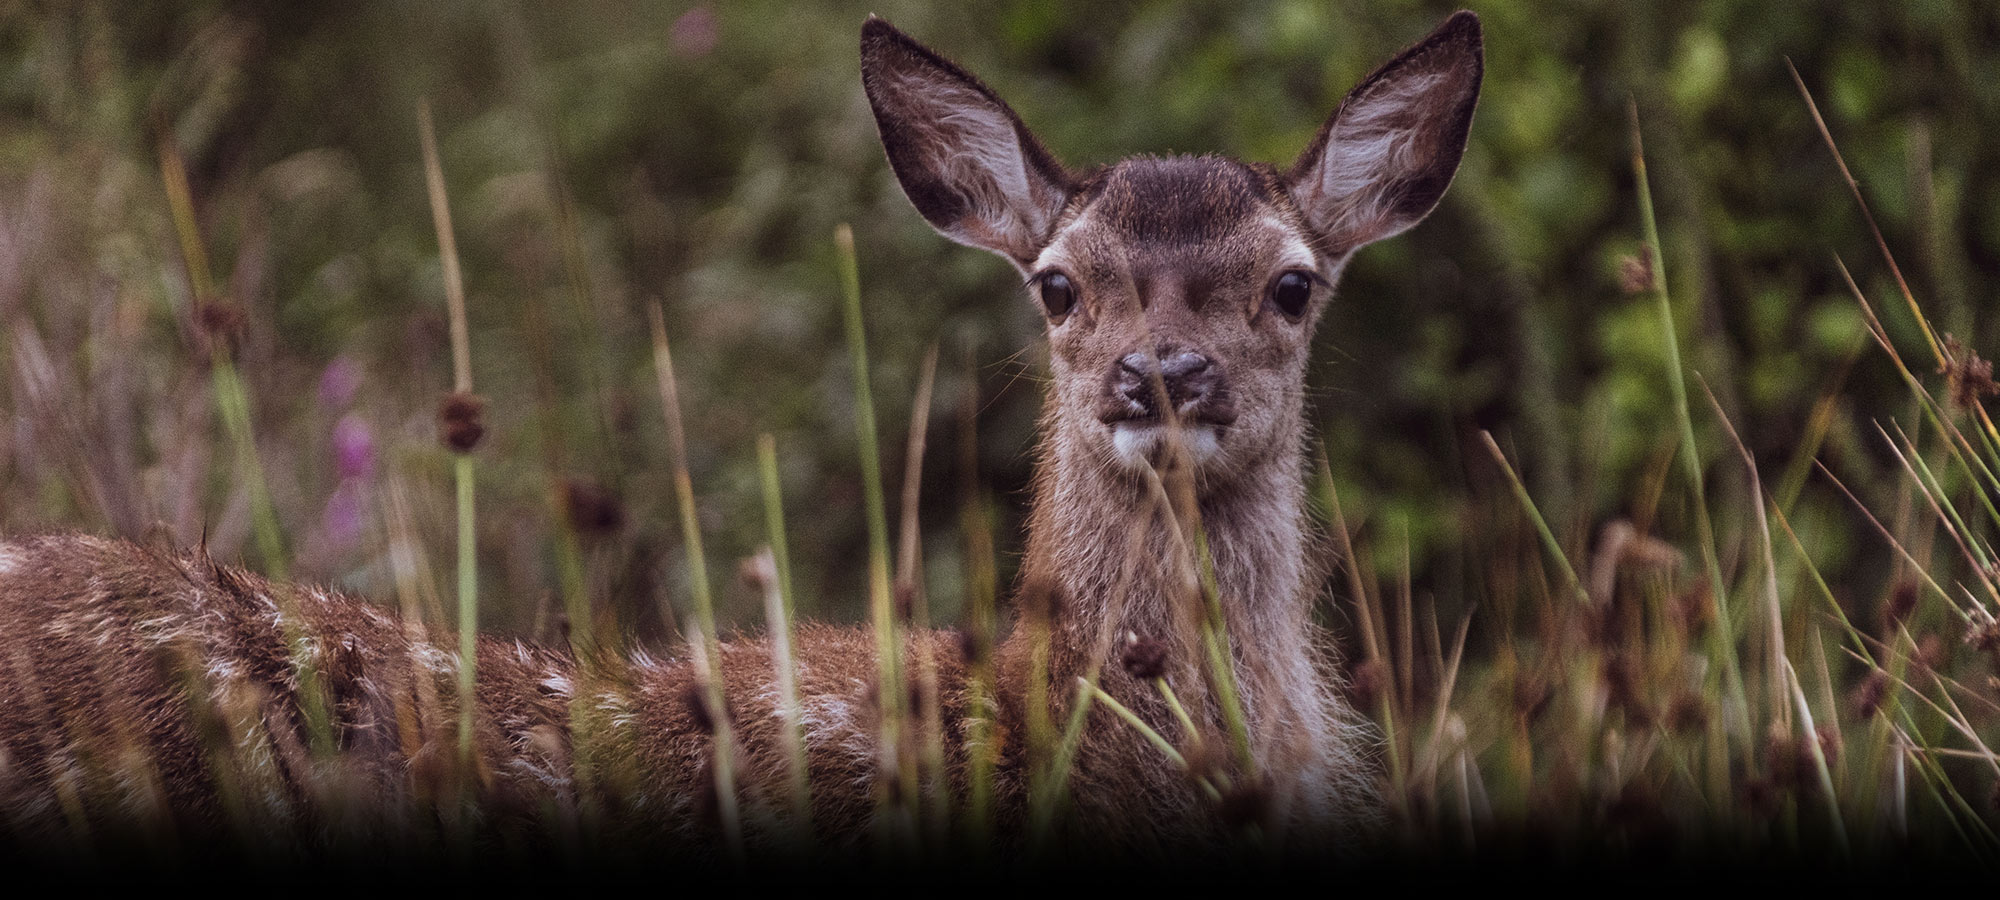 A baby deer in the Scottish Glen Etive